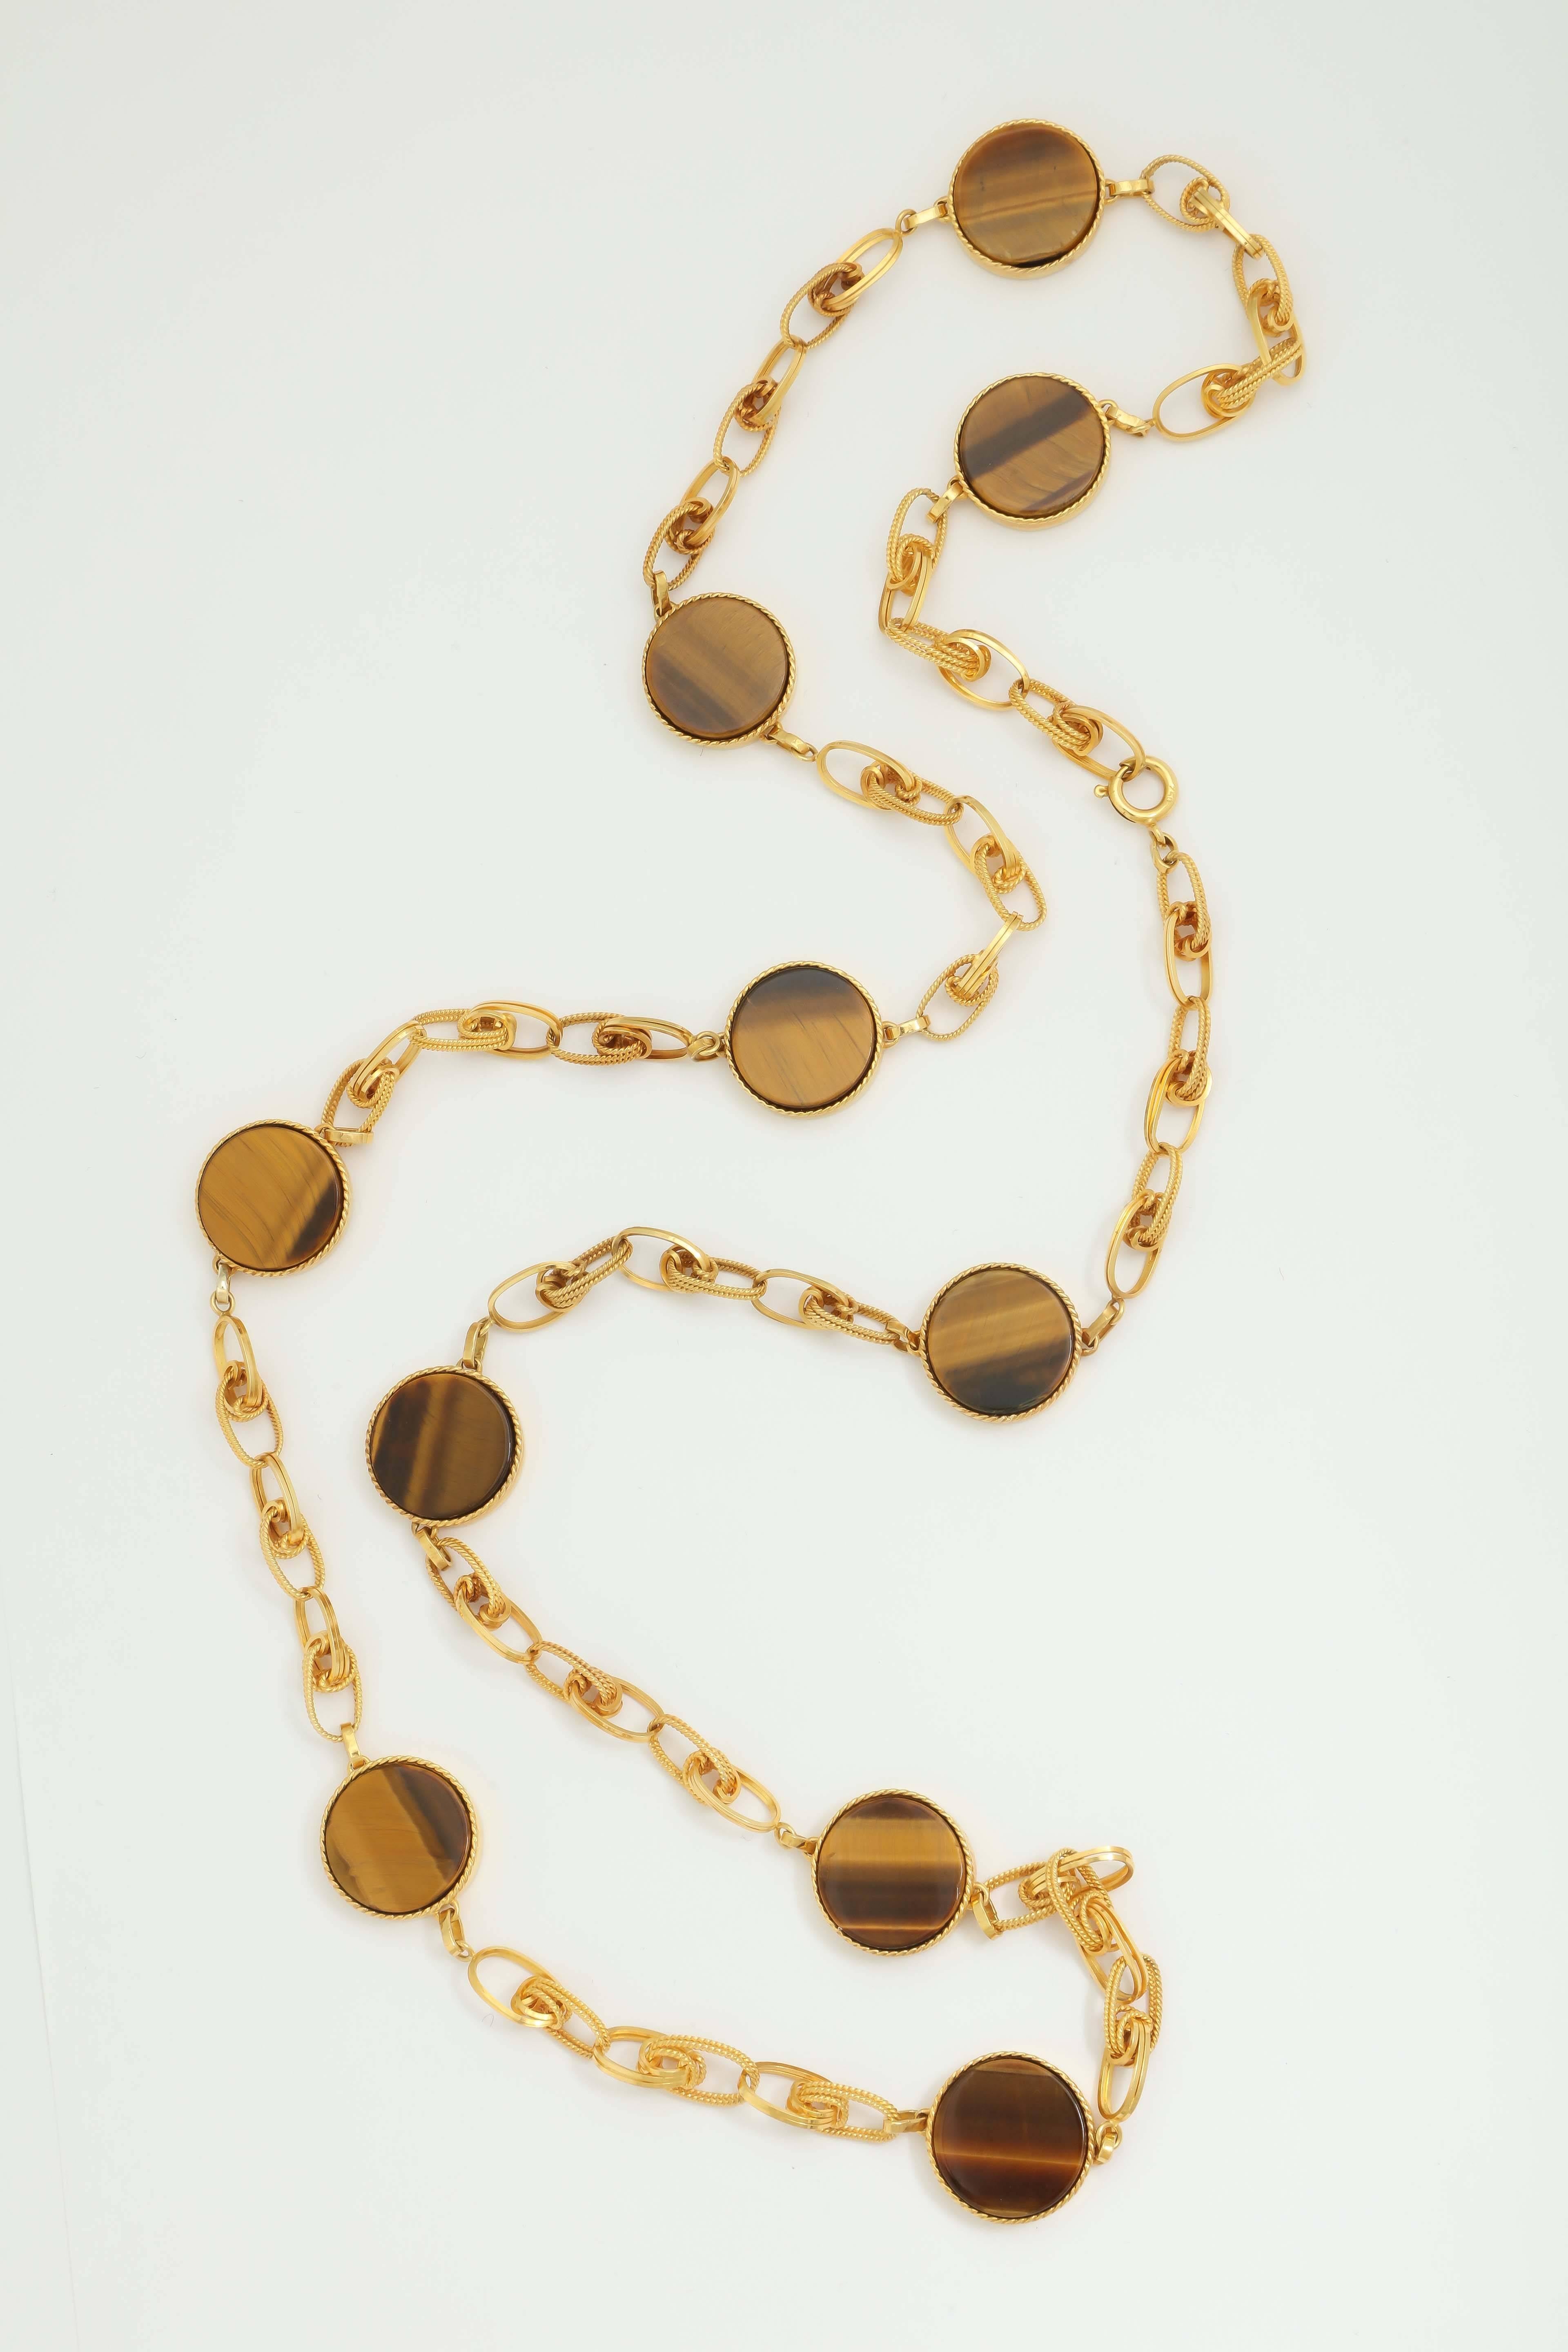 1960s Tiger's Eye Discs and Gold Reversible Necklace Bracelet Chic Ensemble 1